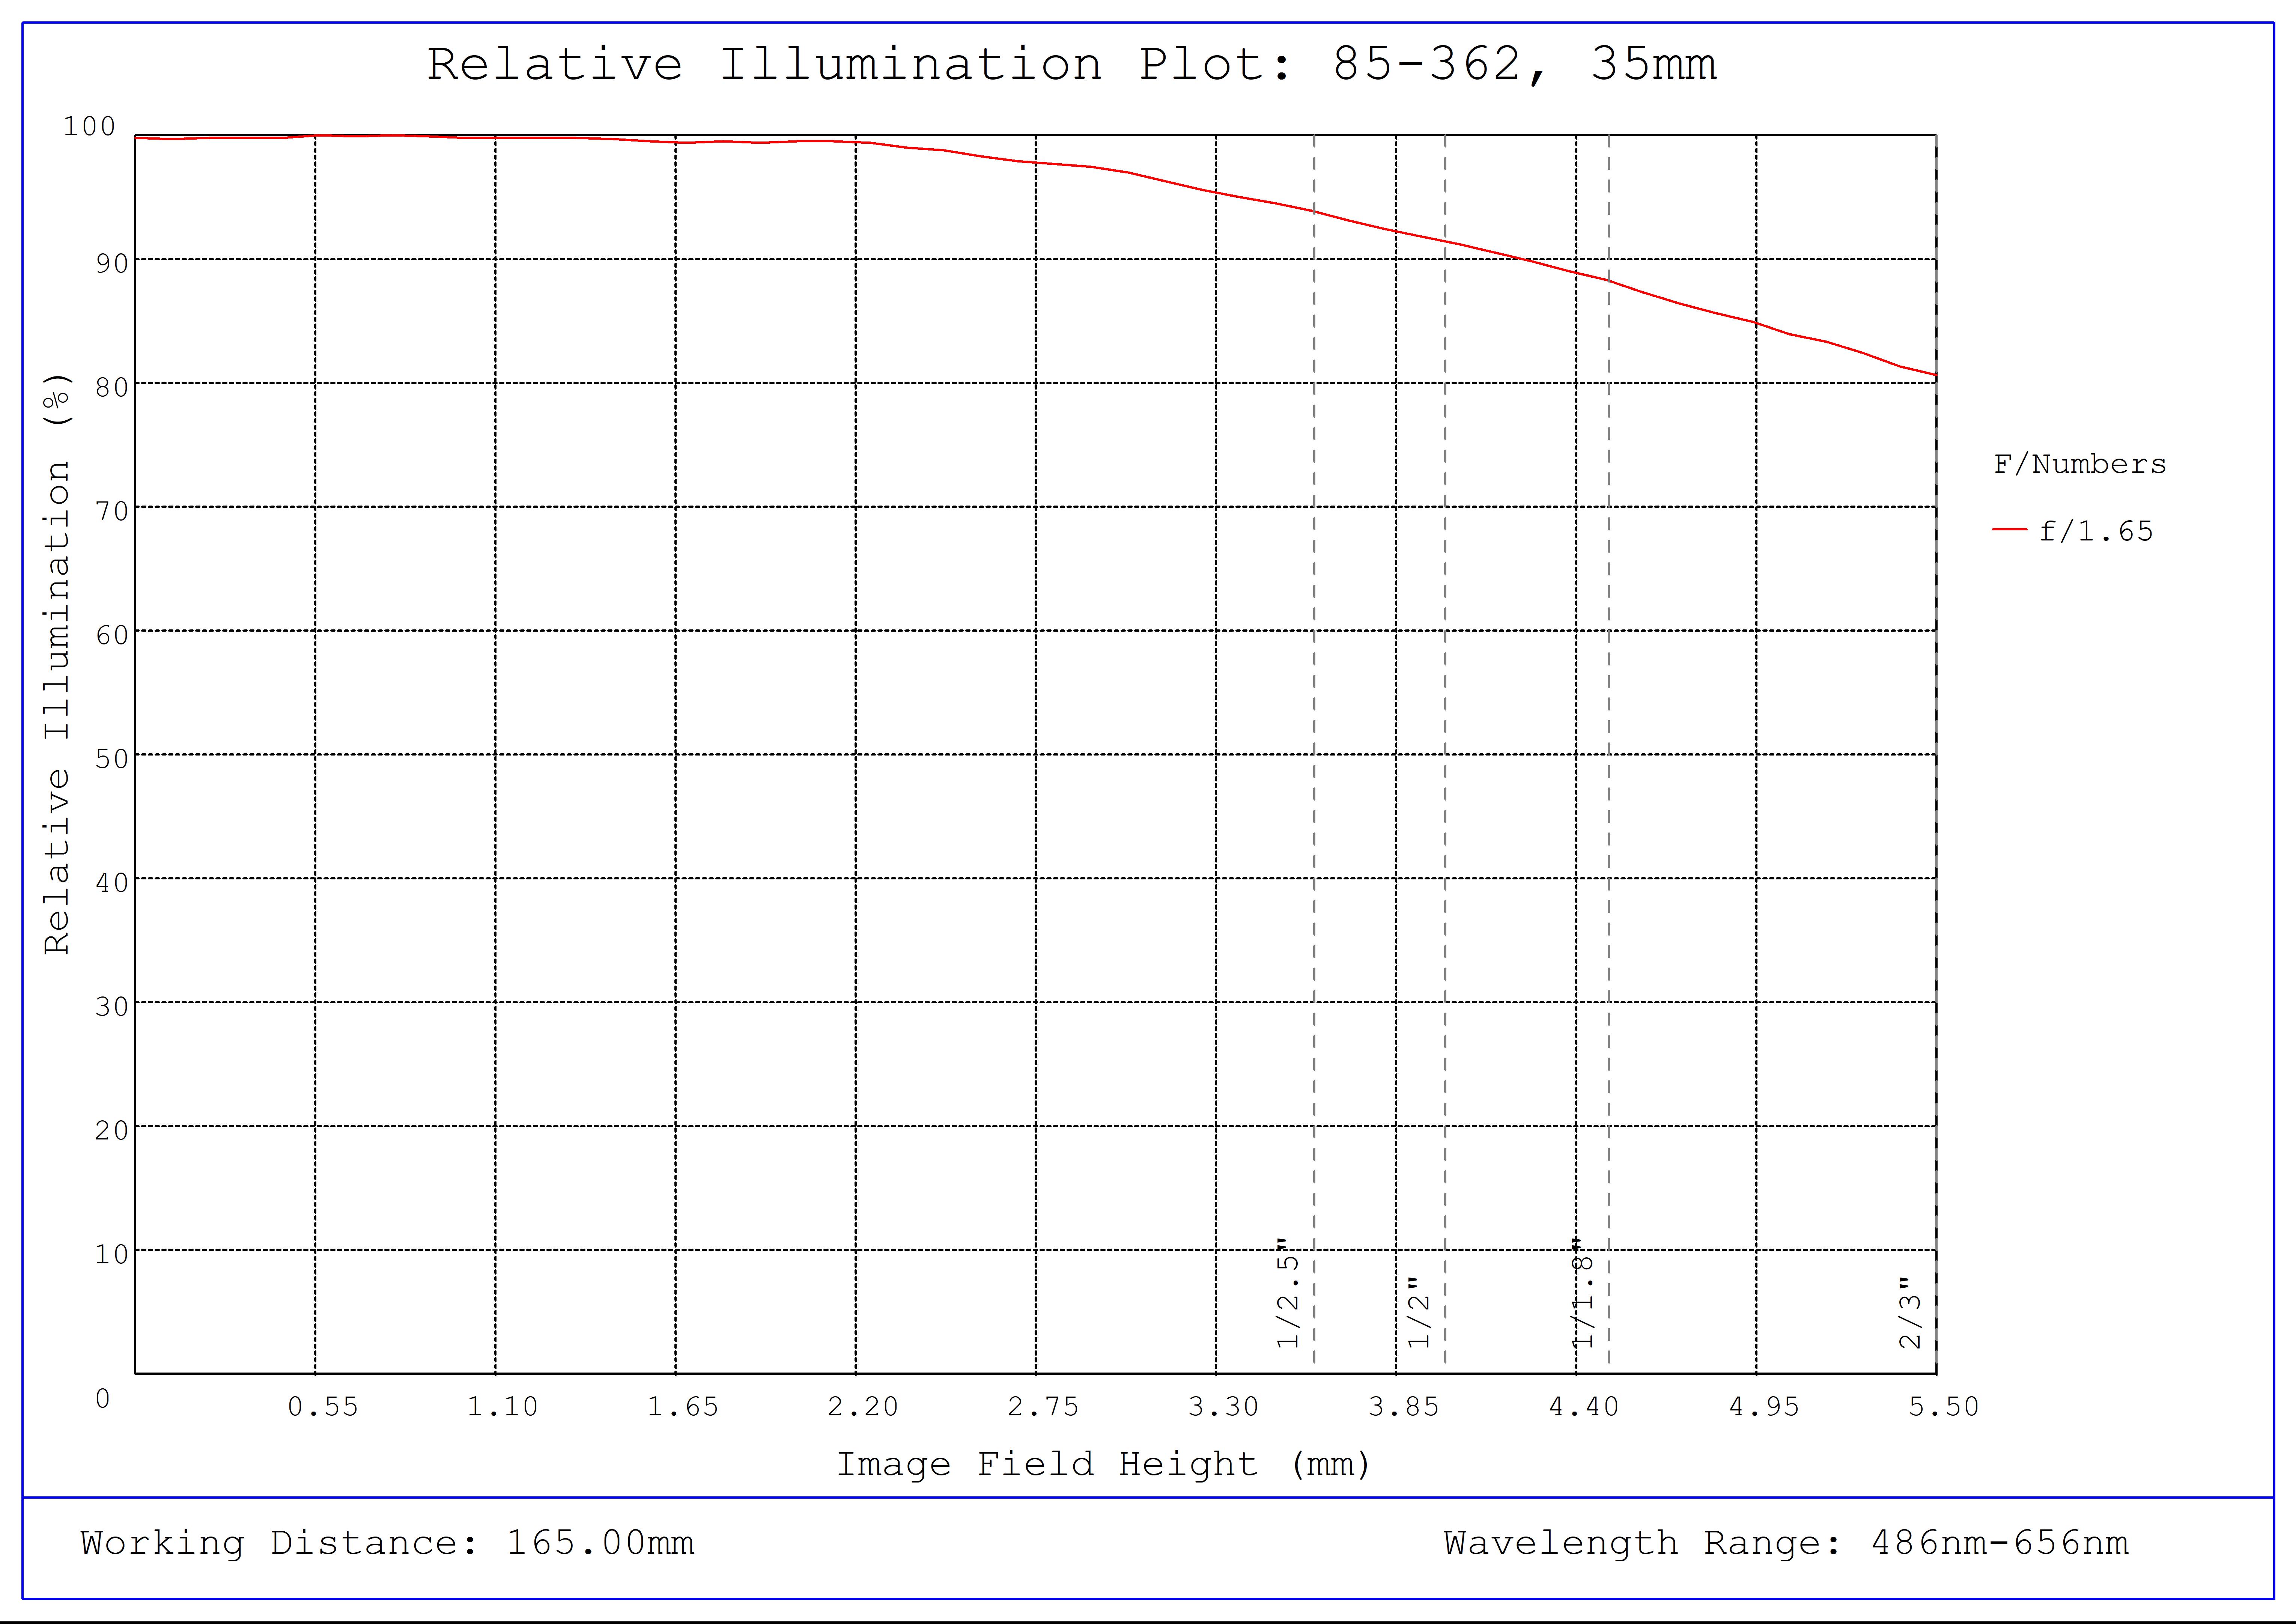 #85-362, 35mm, f/1.65 Ci Series Fixed Focal Length Lens, Relative Illumination Plot